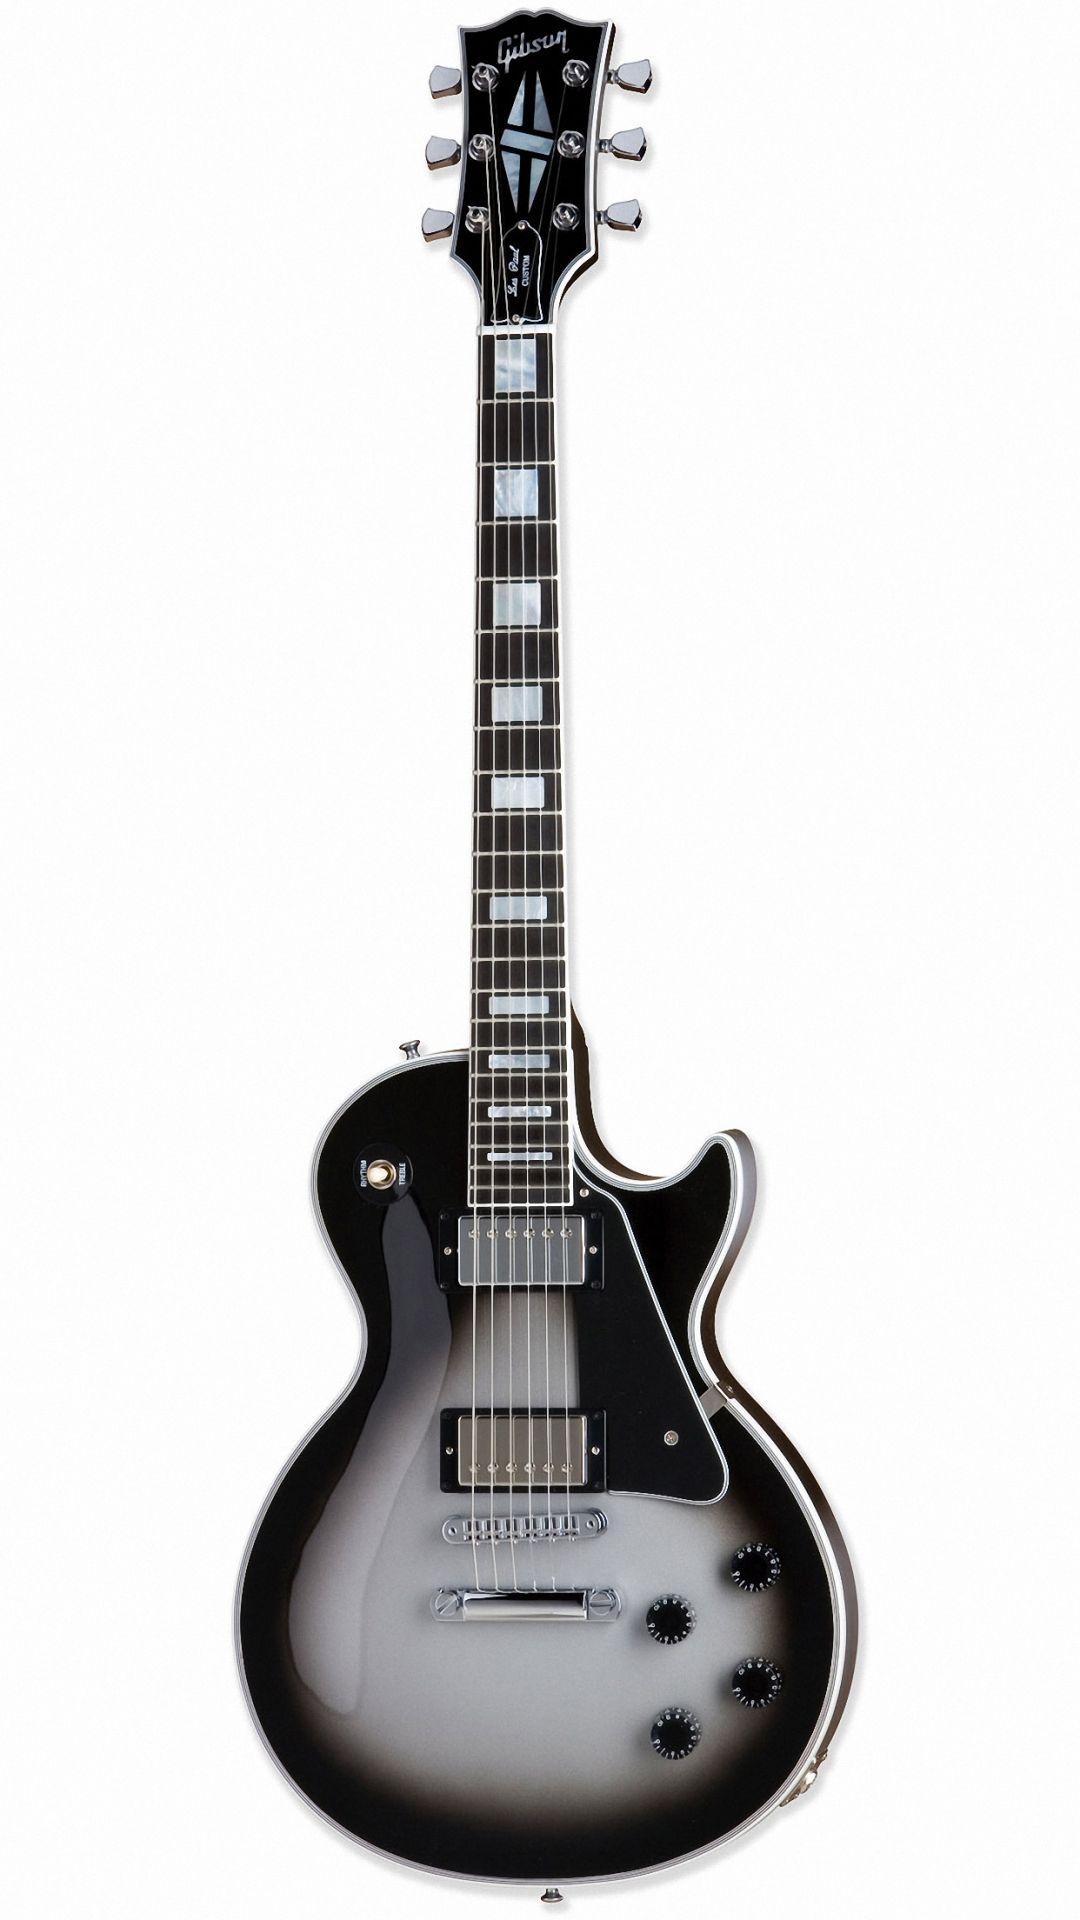 Music Gibson Guitar iPhone 6 Wallpaper HD Les Paul